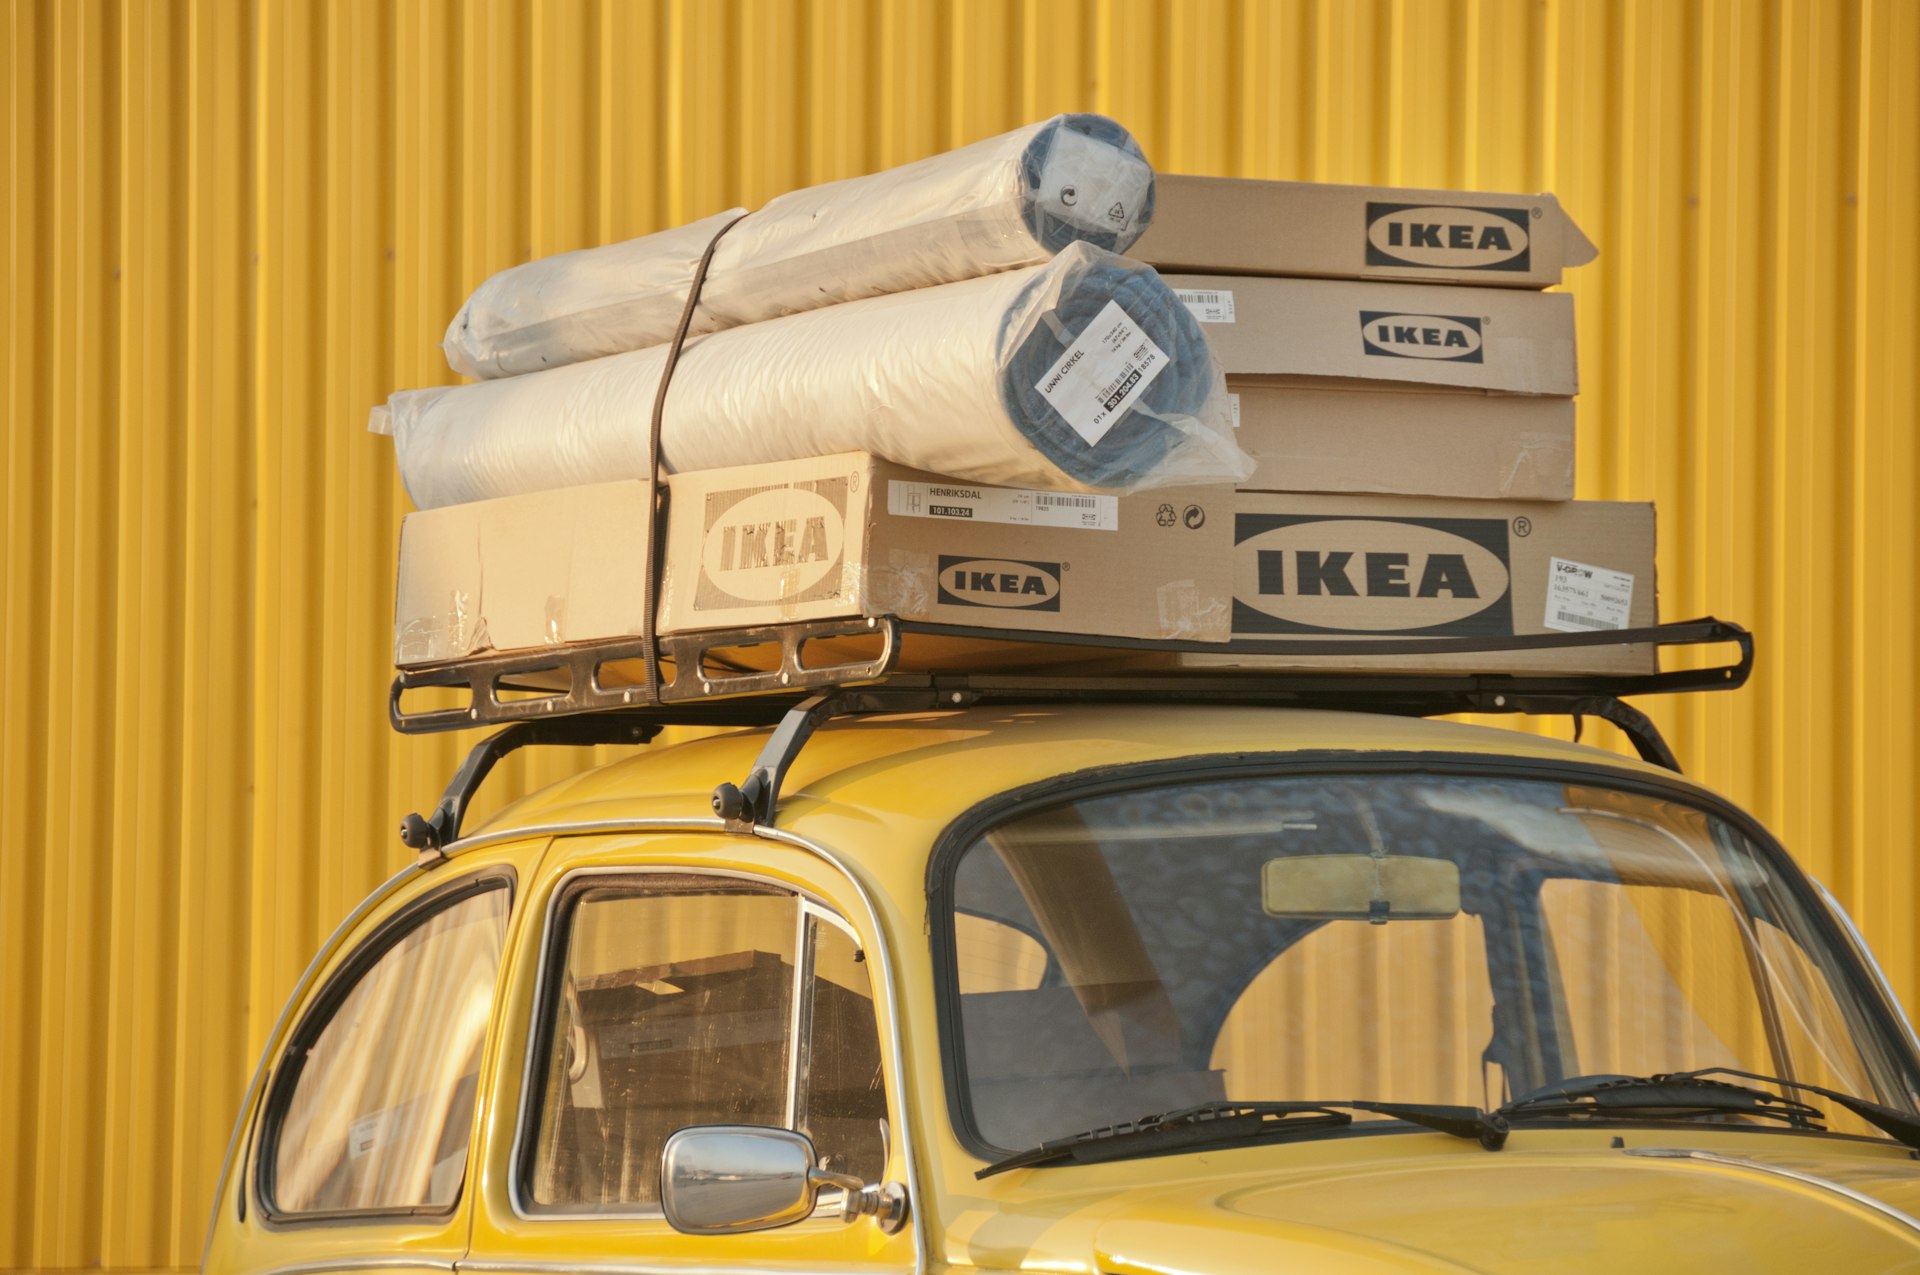 Ikea Boxes at the top of Car, Bornova, Izmir, Turkey